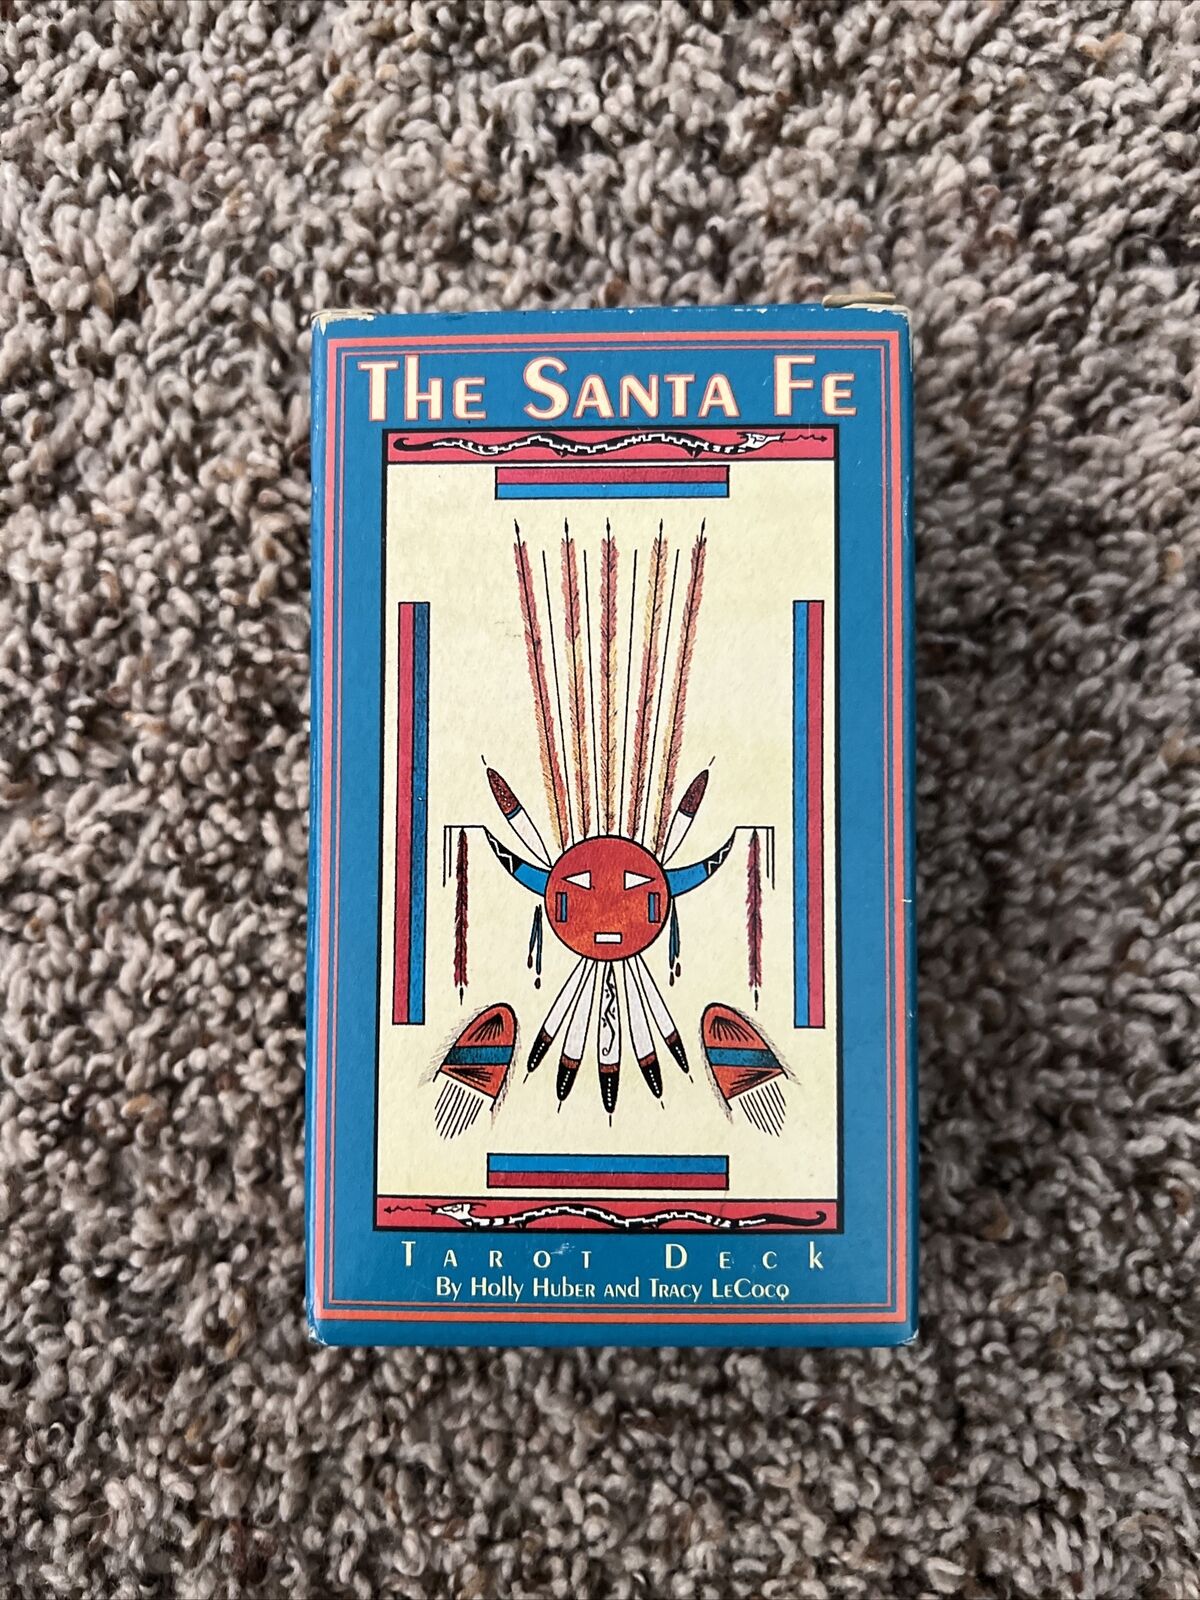 The Santa Fe Tarot Deck By Holly Huber & Tracy Lecoq